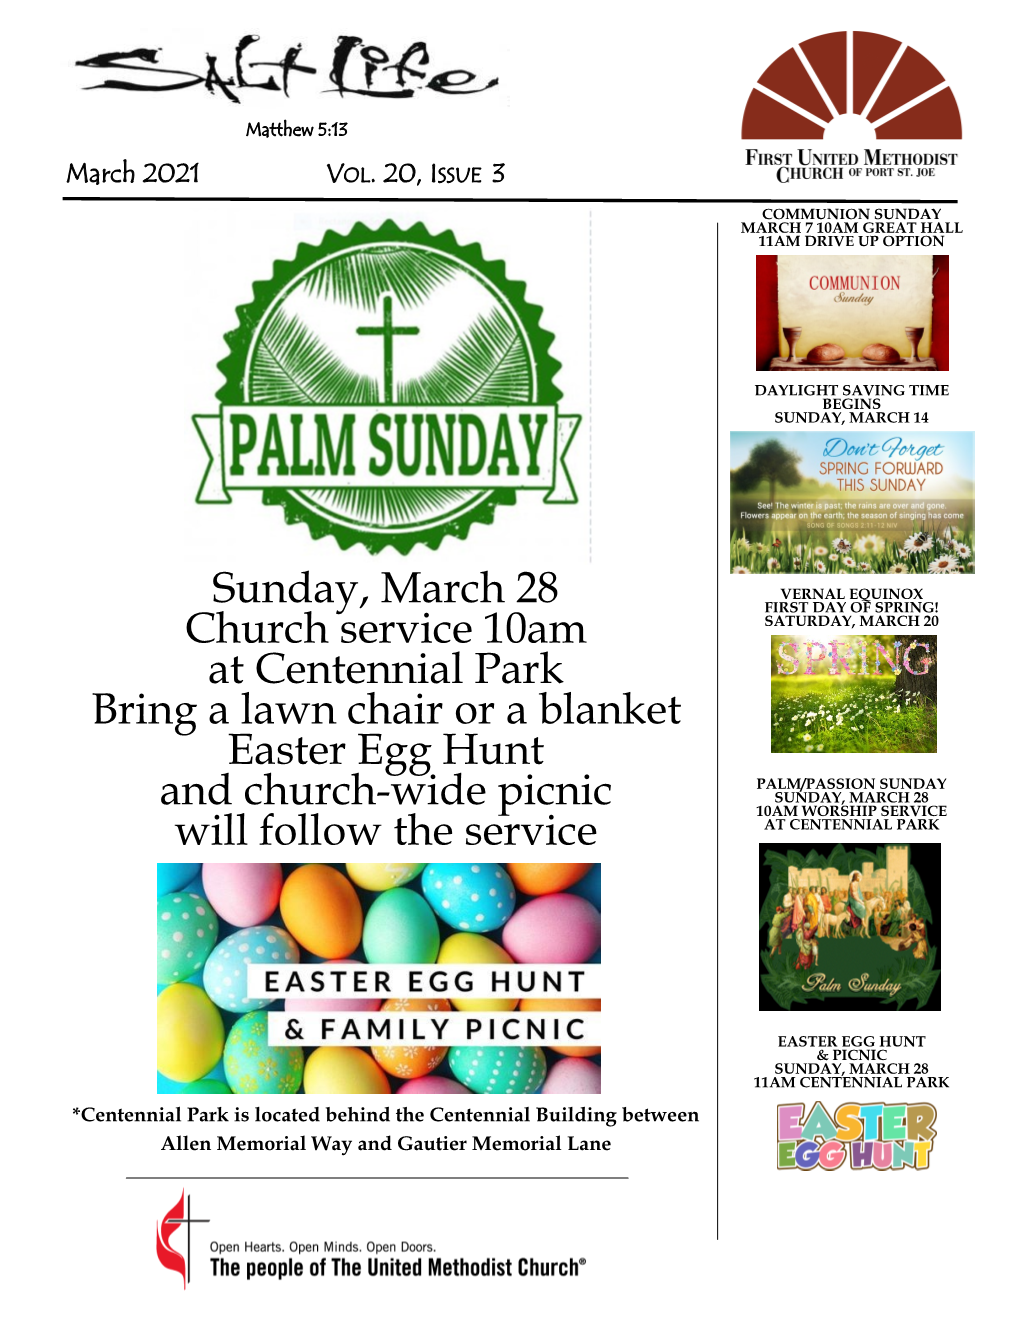 Sunday, March 28 Church Service 10Am at Centennial Park Bring A